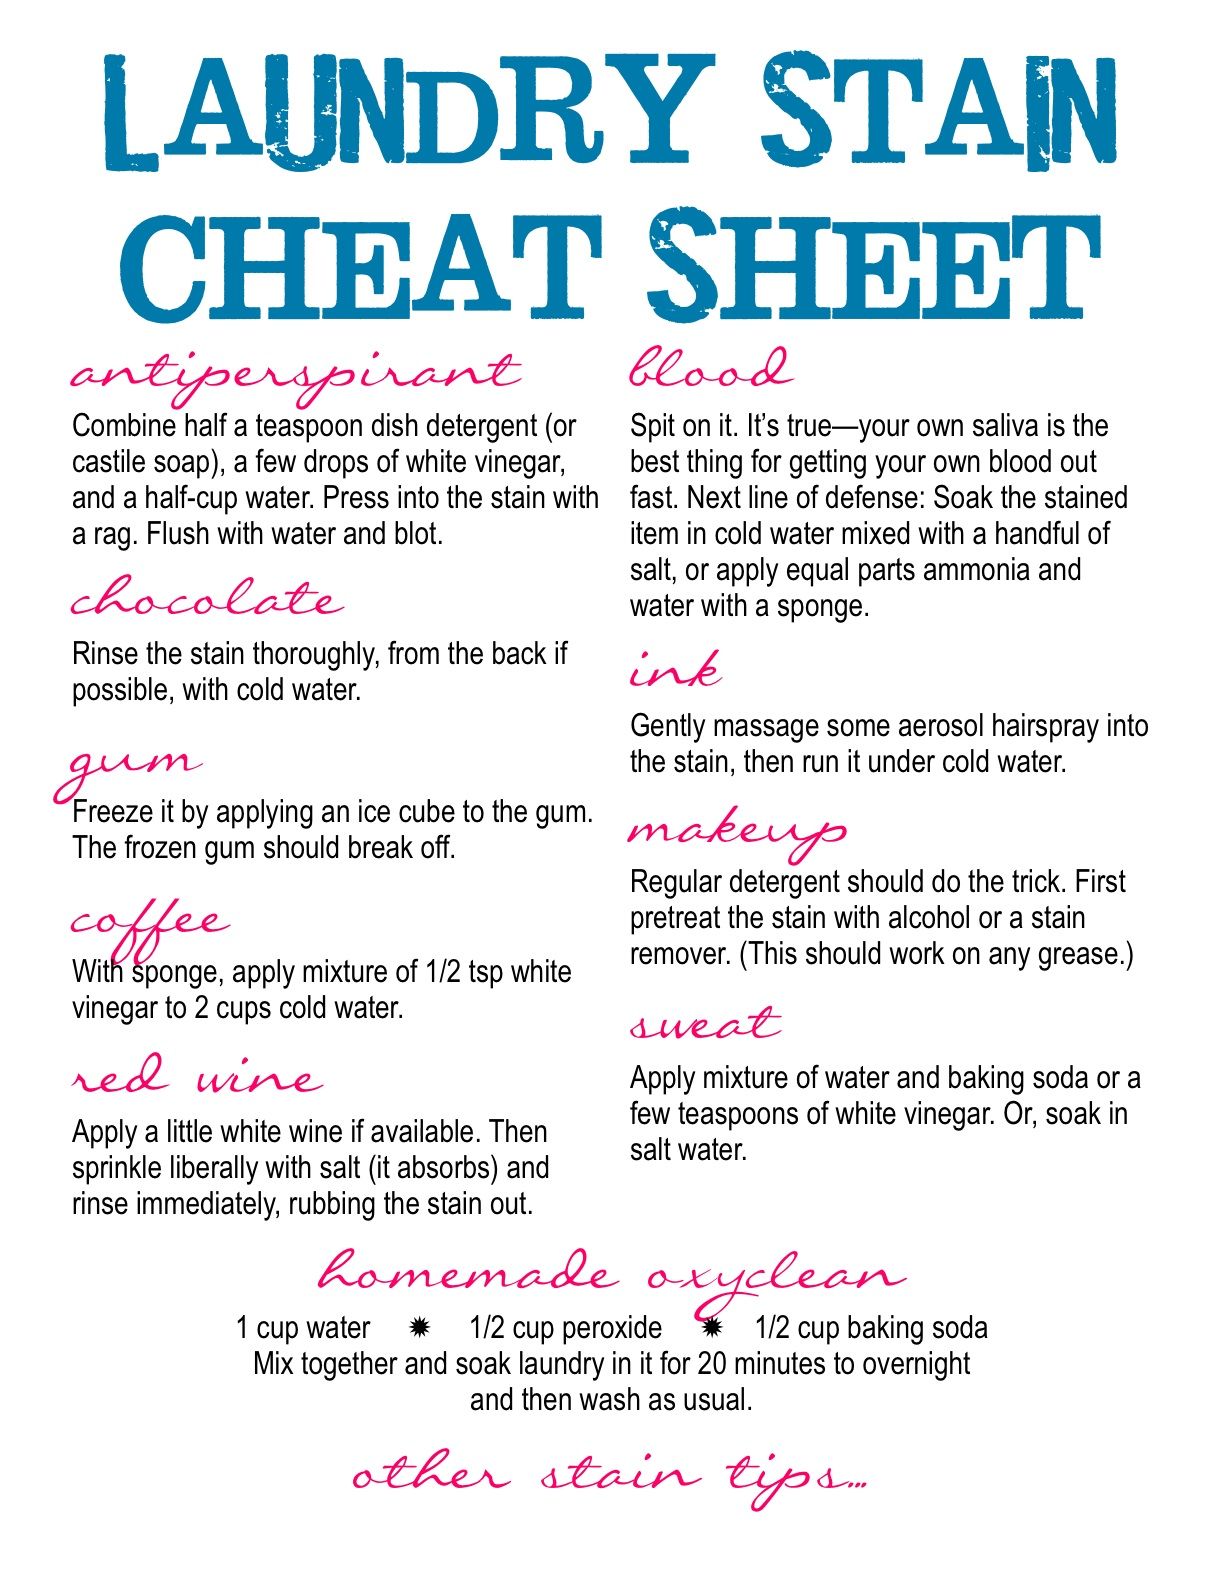 Laundry Stain Cheat Sheet!